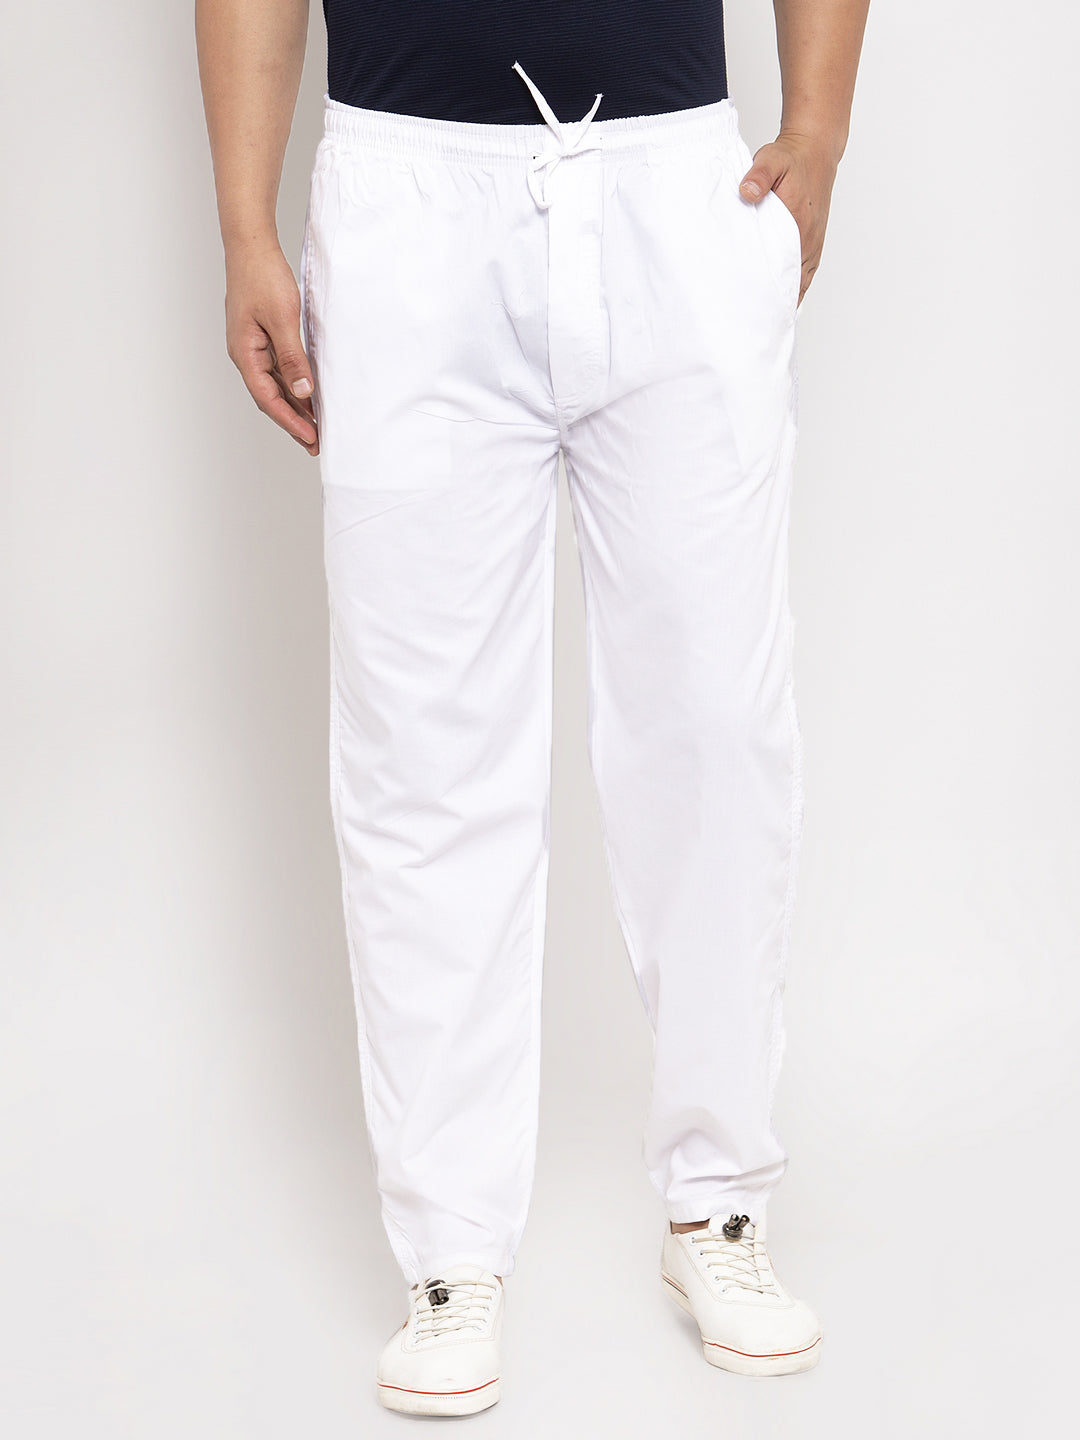 Jainish Men's White Solid Cotton Track Pants